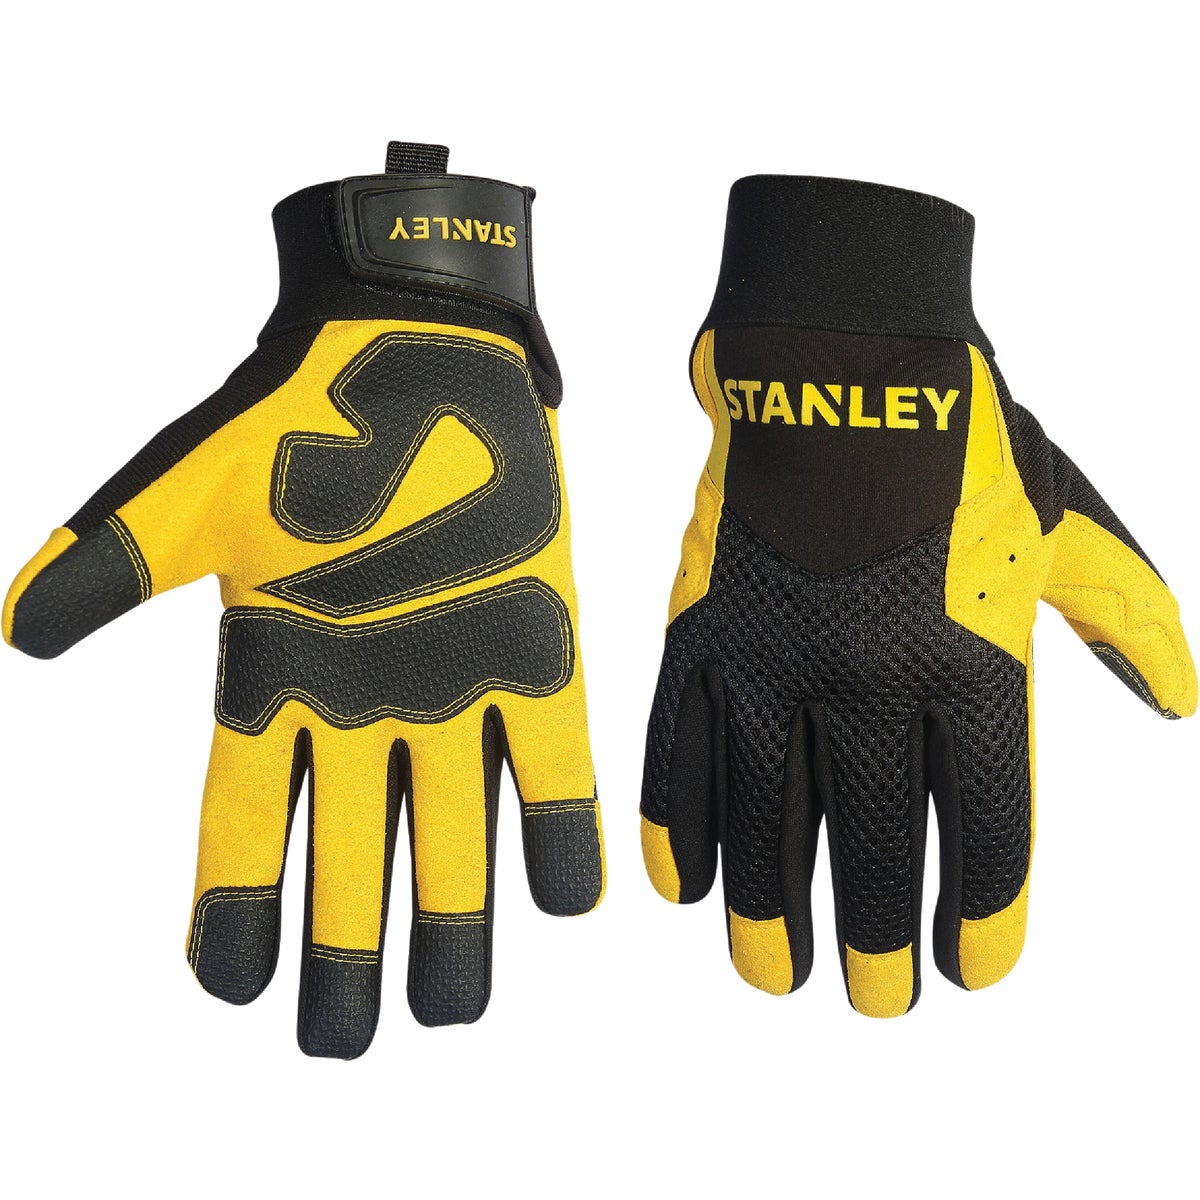 Item 769243, Synthetic leather comfort grip mechanics high performance glove.